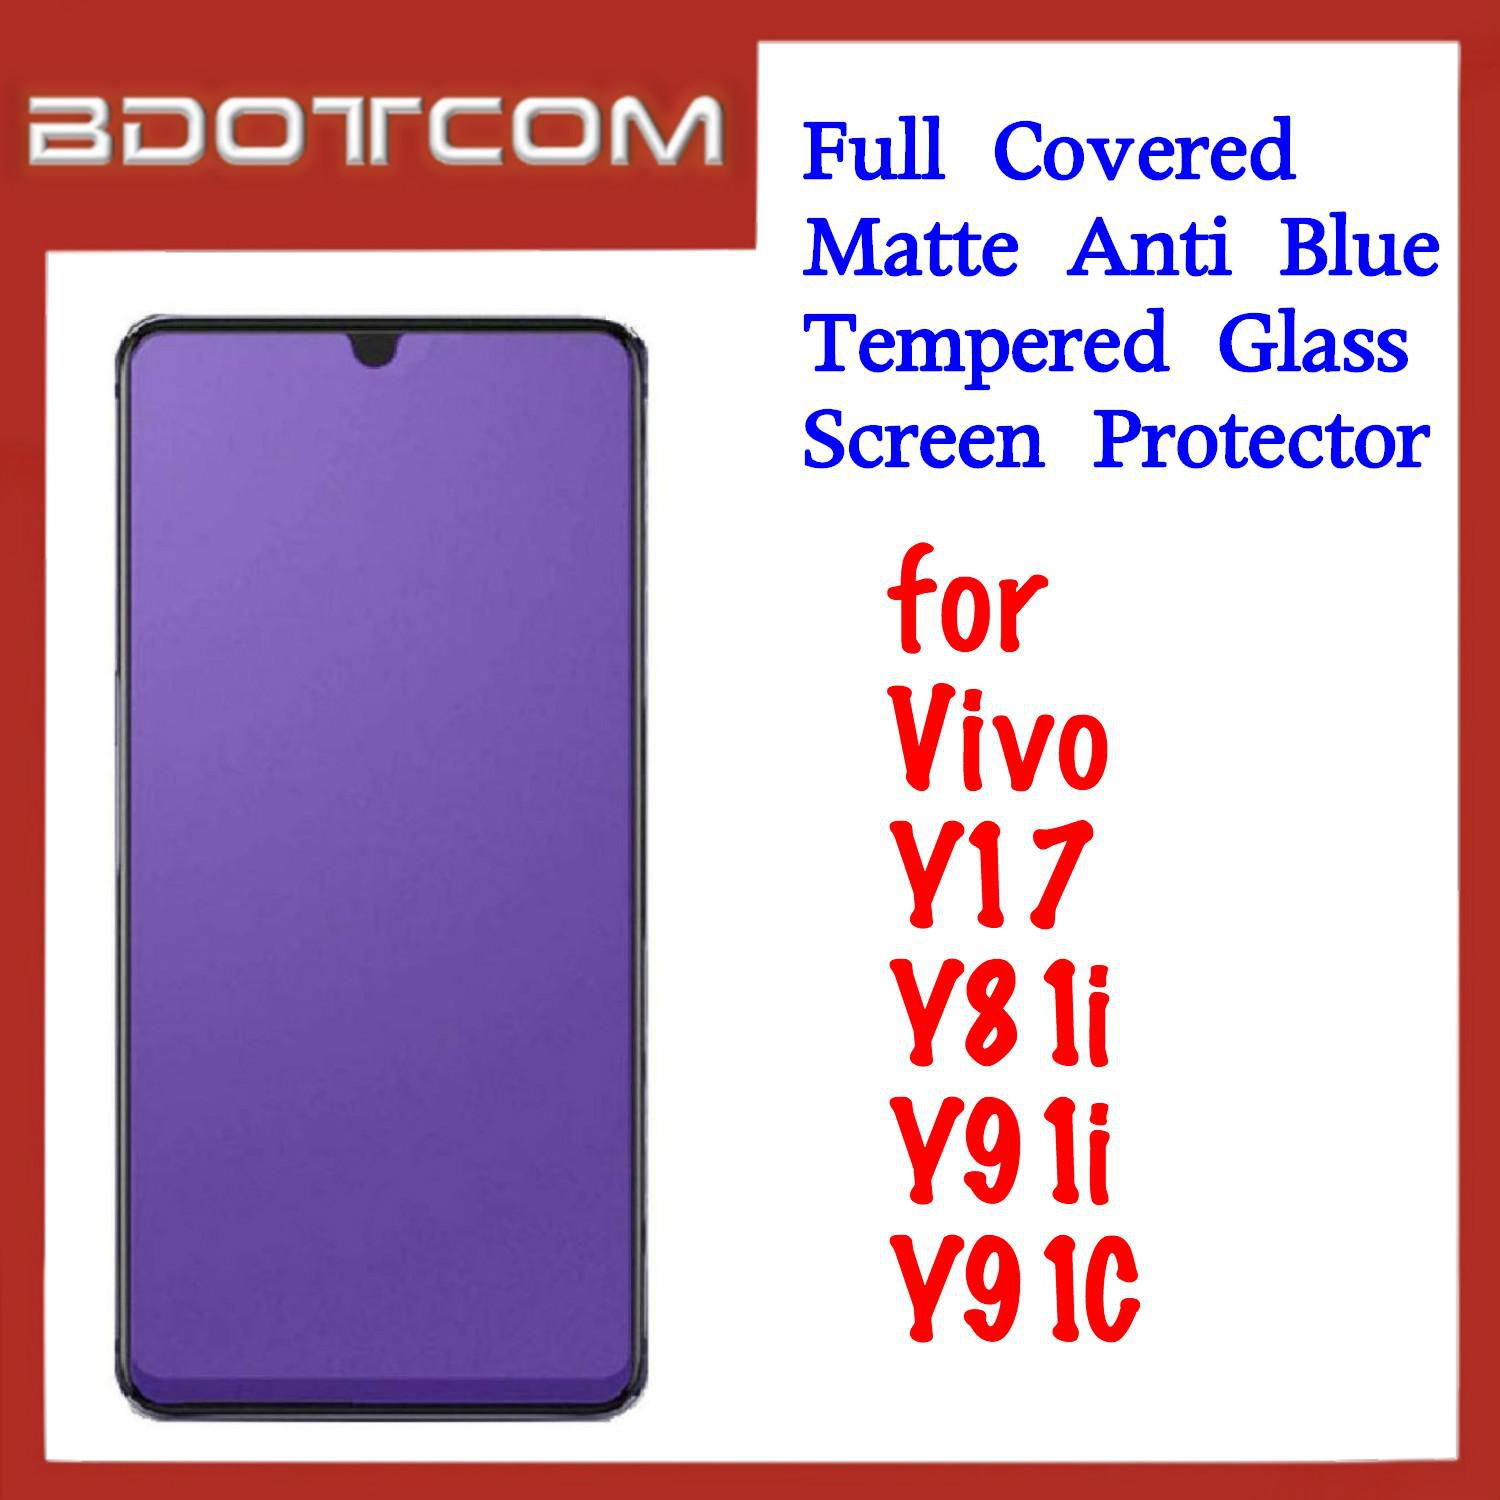 Bdotcom Full Covered Matte Anti Blue Tempered Glass Screen for Vivo Y17